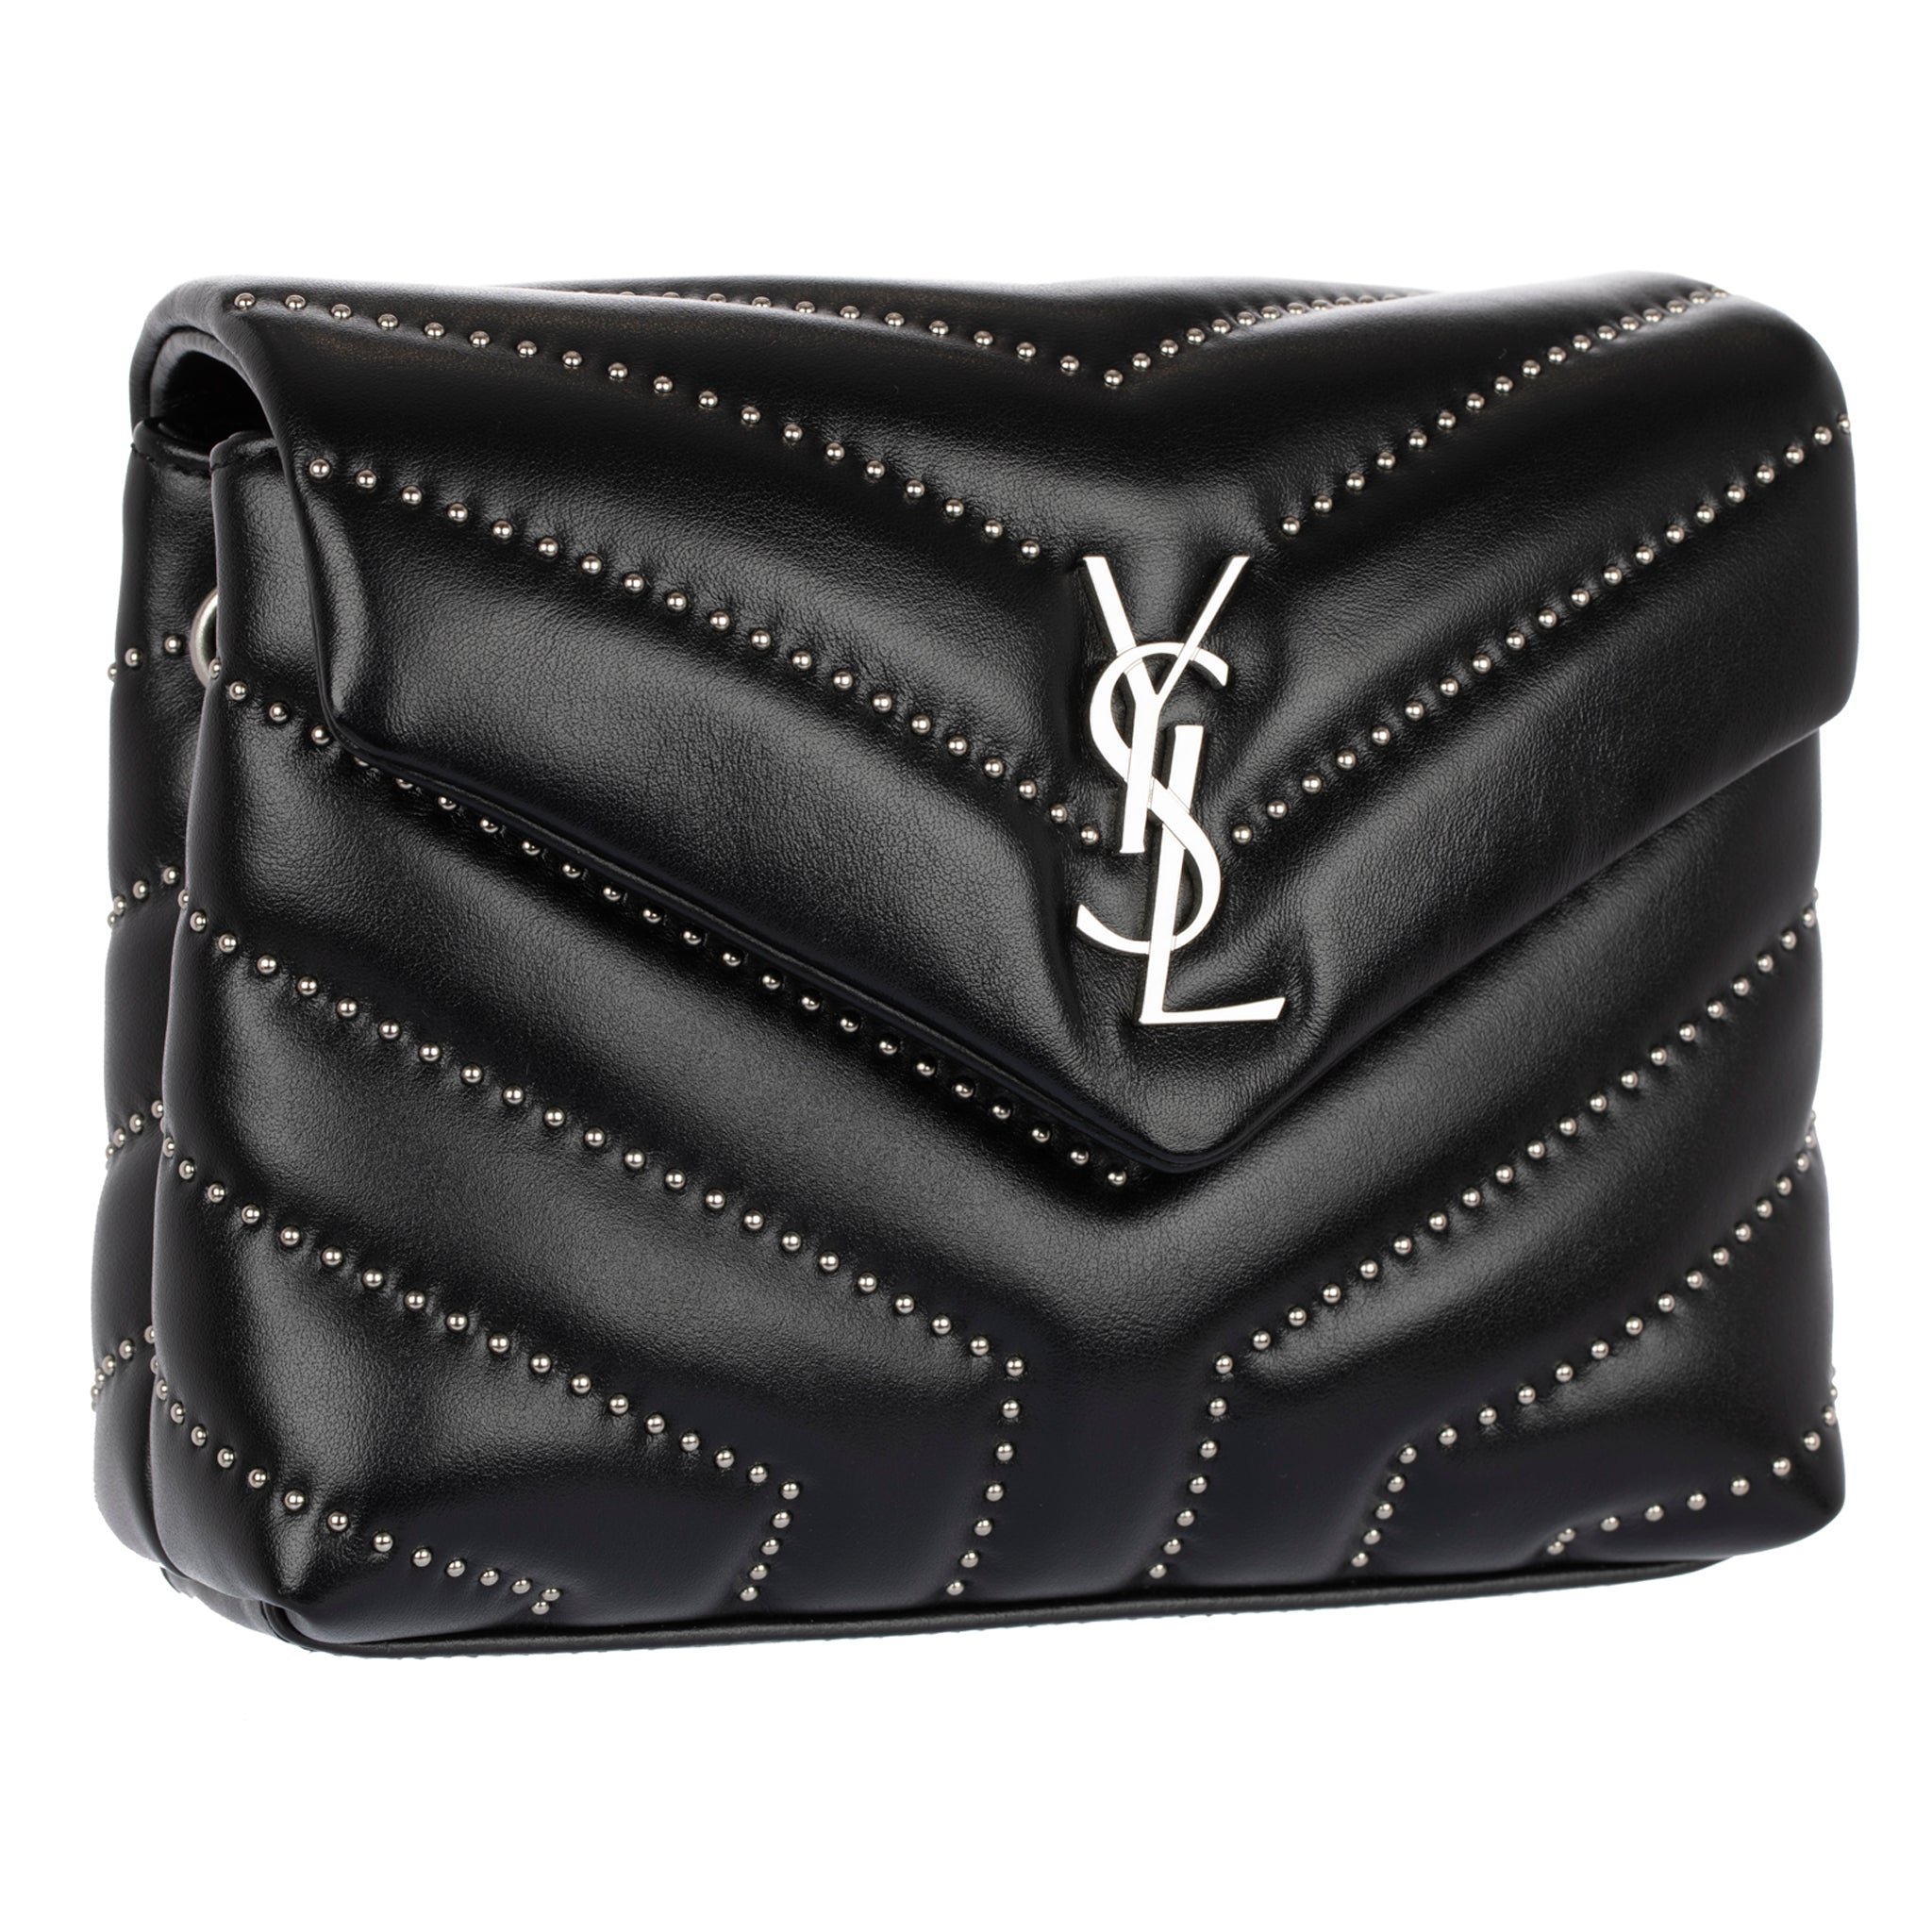 Yves Saint Laurent LouLou Handbag Black leather With Studs